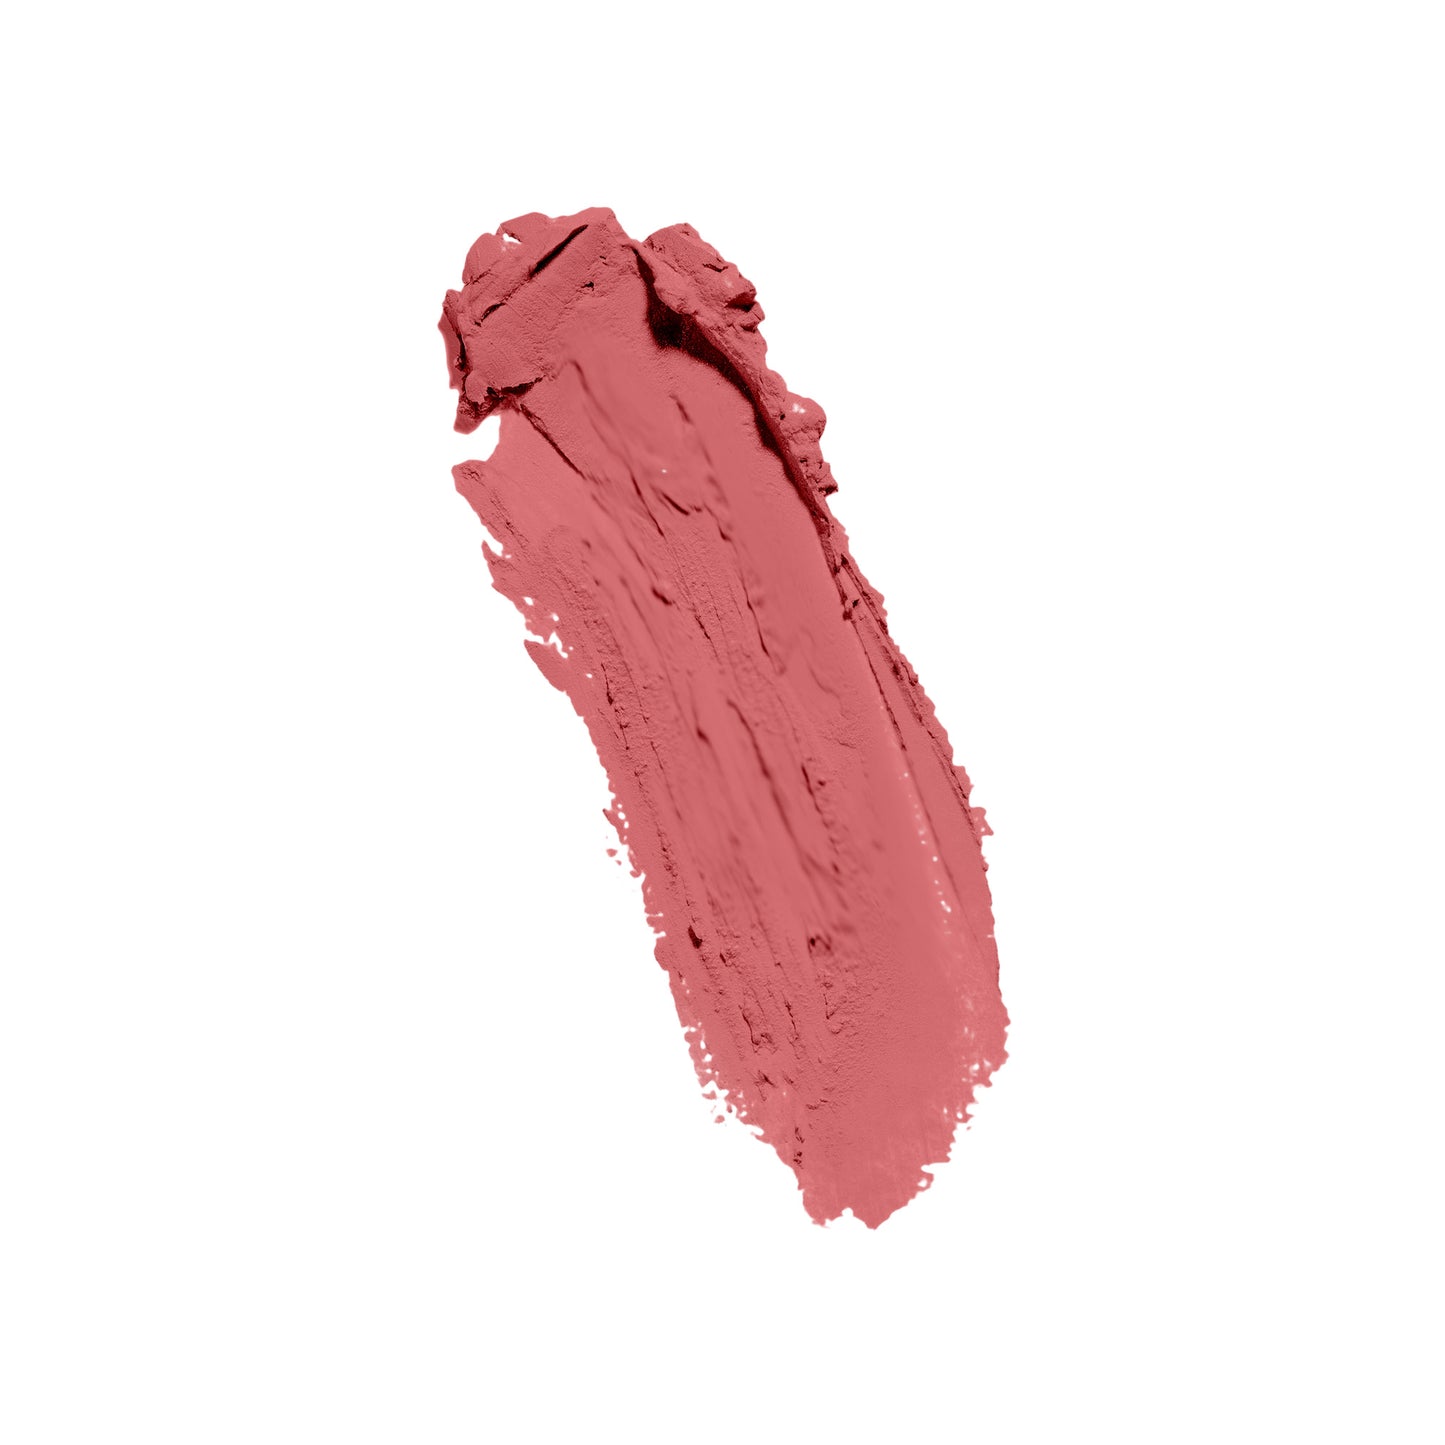 NXTE NXTEssence Future Pink Lip Stick Swatch Color